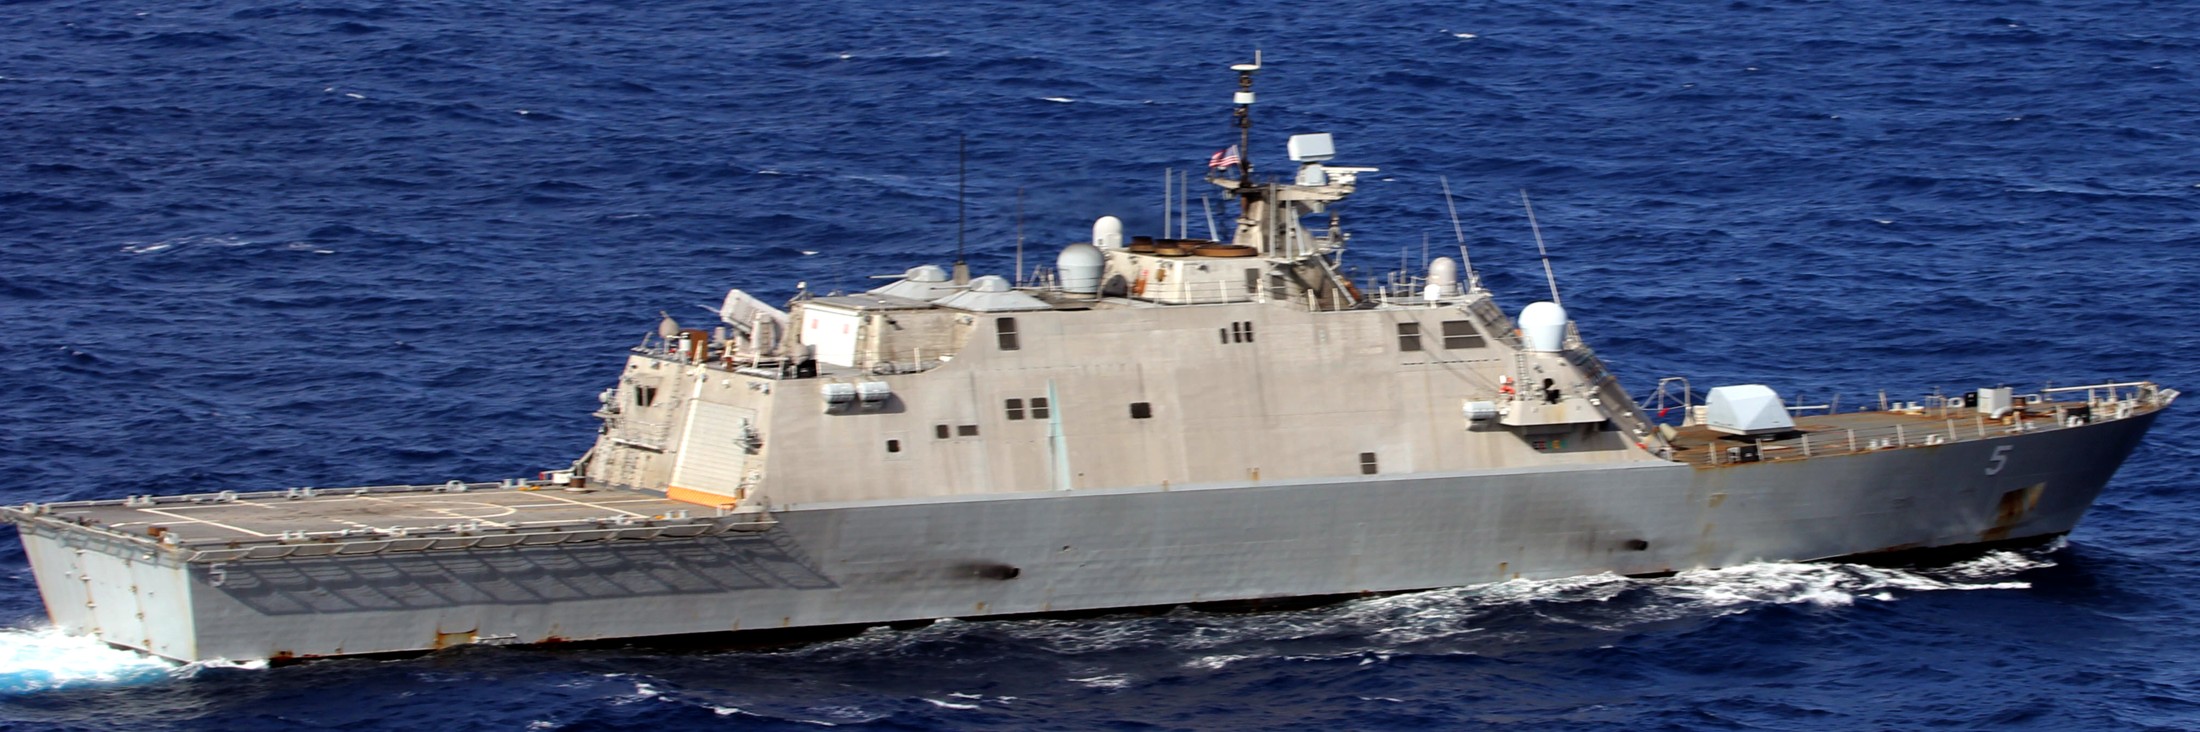 lcs-5 uss milwaukee freedom class littoral combat ship us navy caribbean sea 2022 64